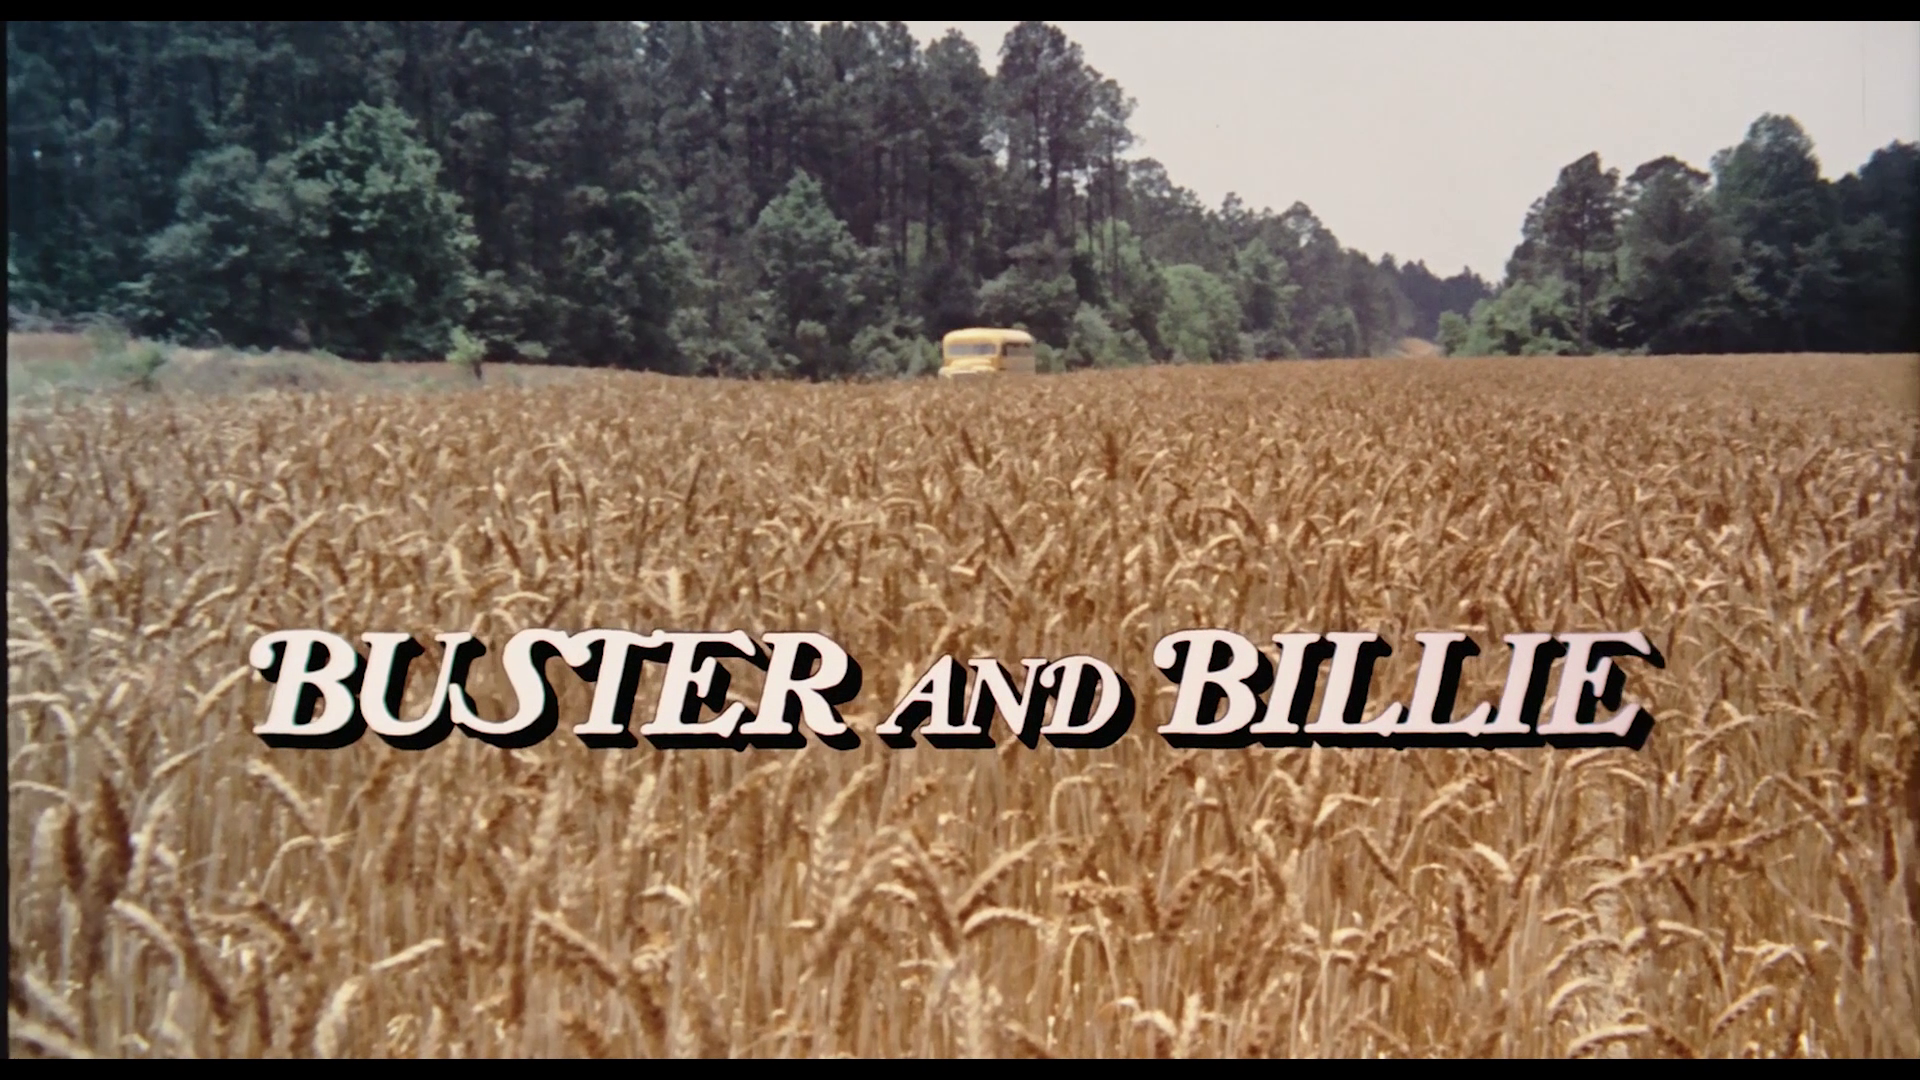 Buster and Billie - Robert Englund